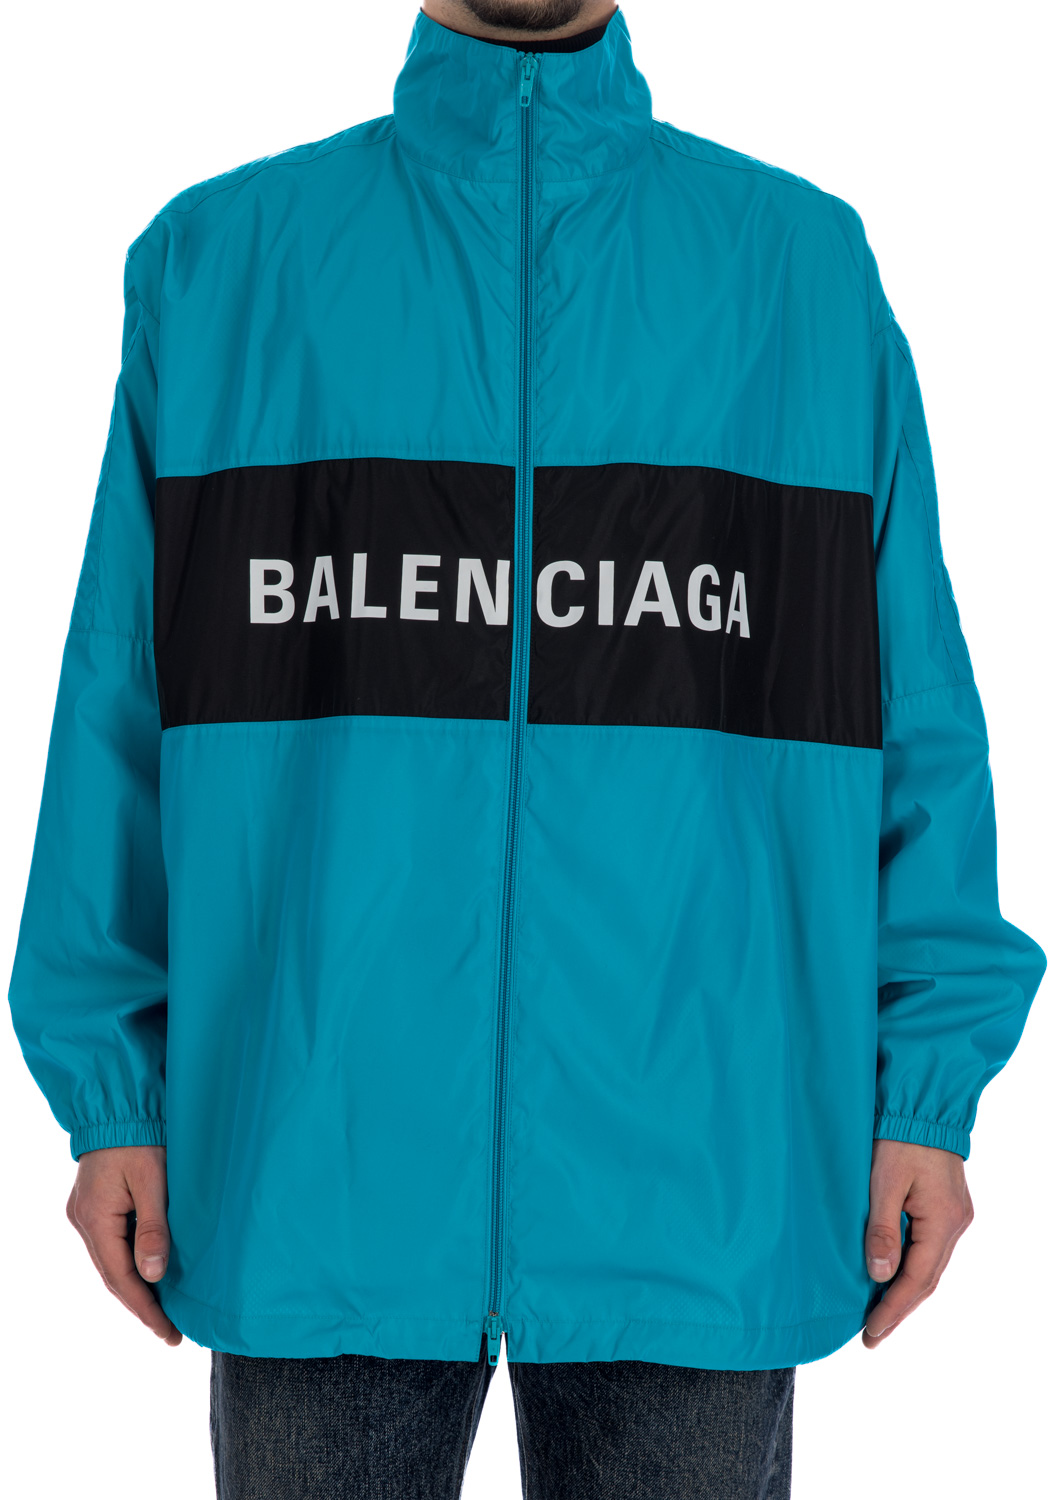 BALENCIAGA: jacket for woman - Stone Washed | Balenciaga jacket 678354TDW14  online at GIGLIO.COM